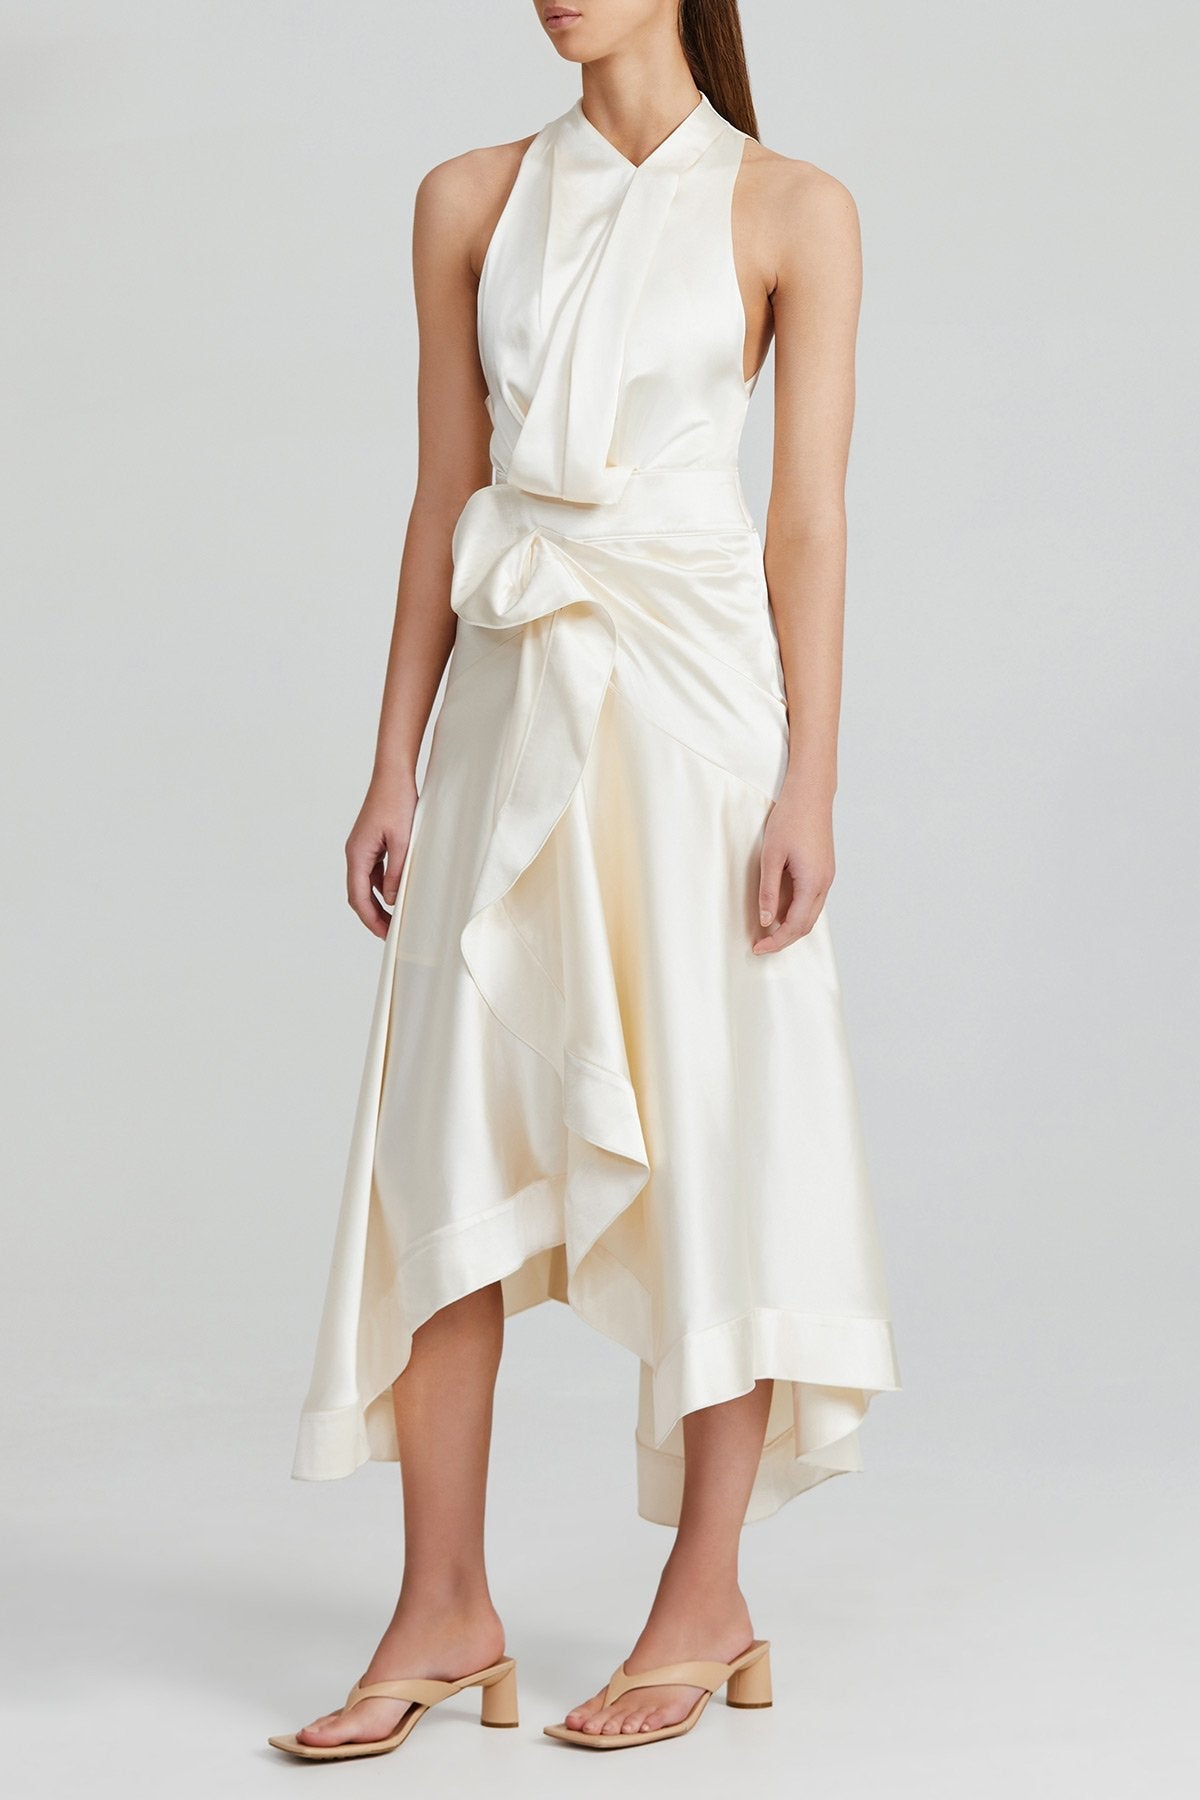 Acler Millbank Dress - Estilo Boutique